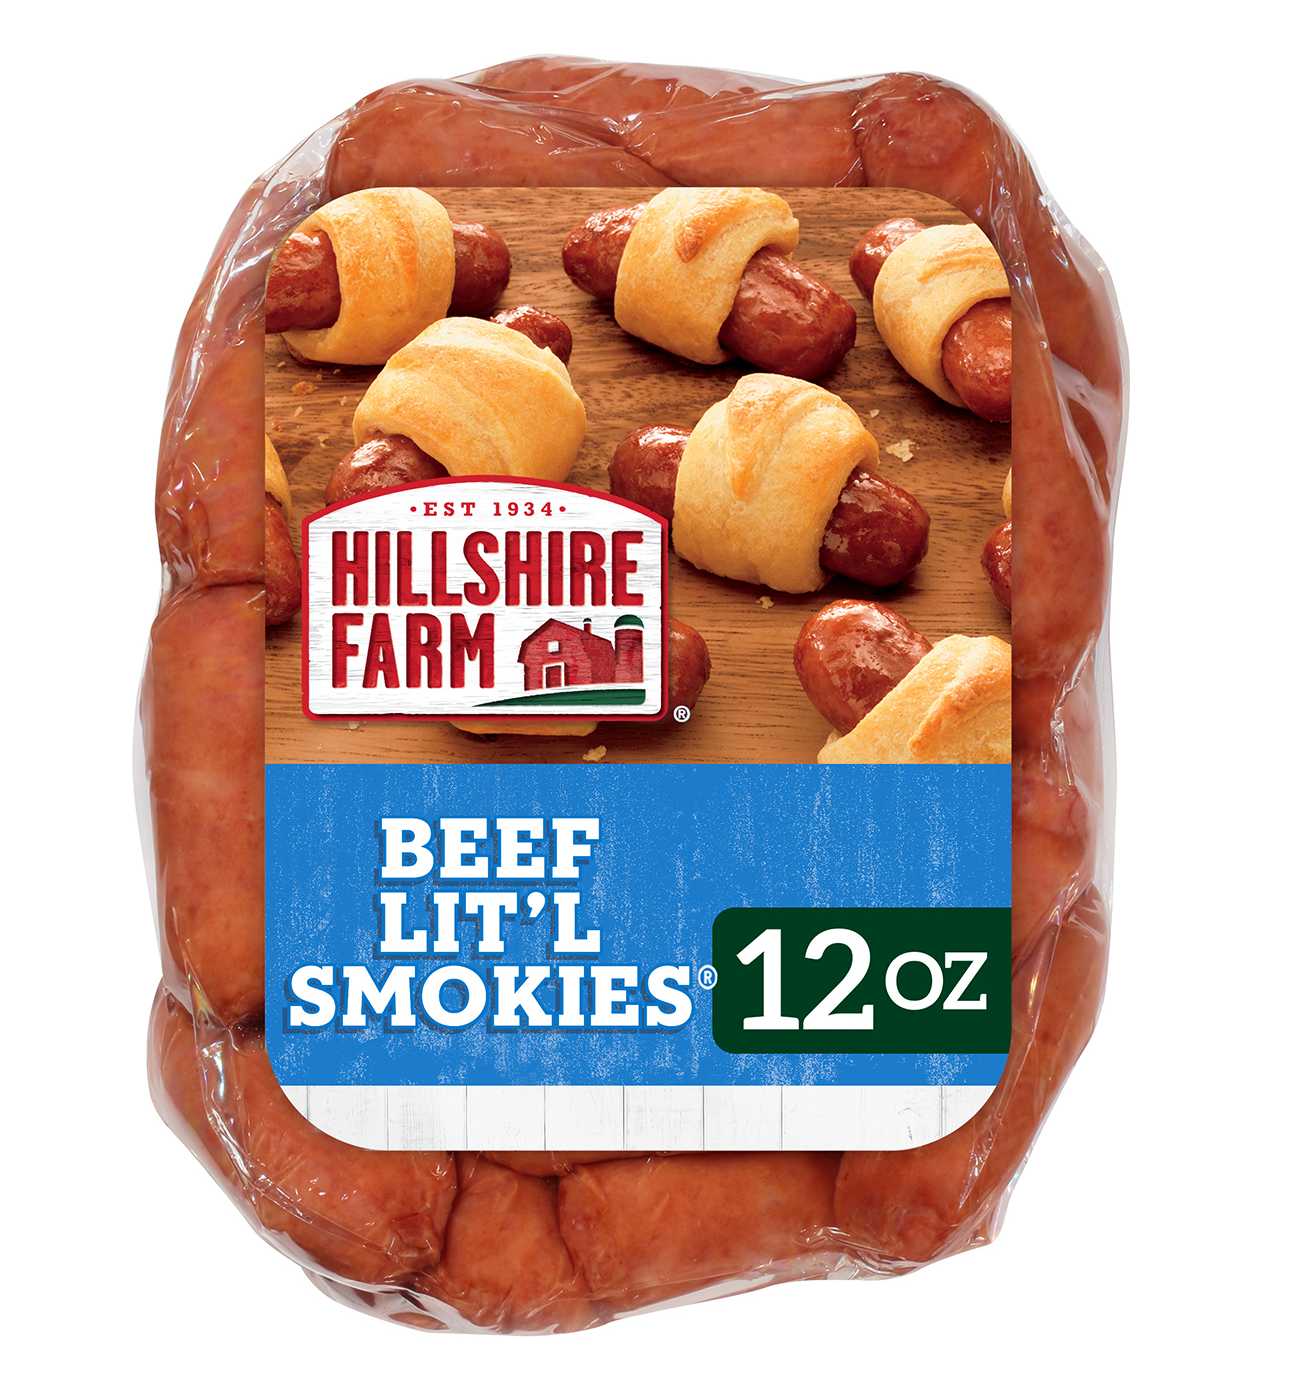 Hillshire Farm Beef Lit'l Smokies Smoked Sausage; image 1 of 4